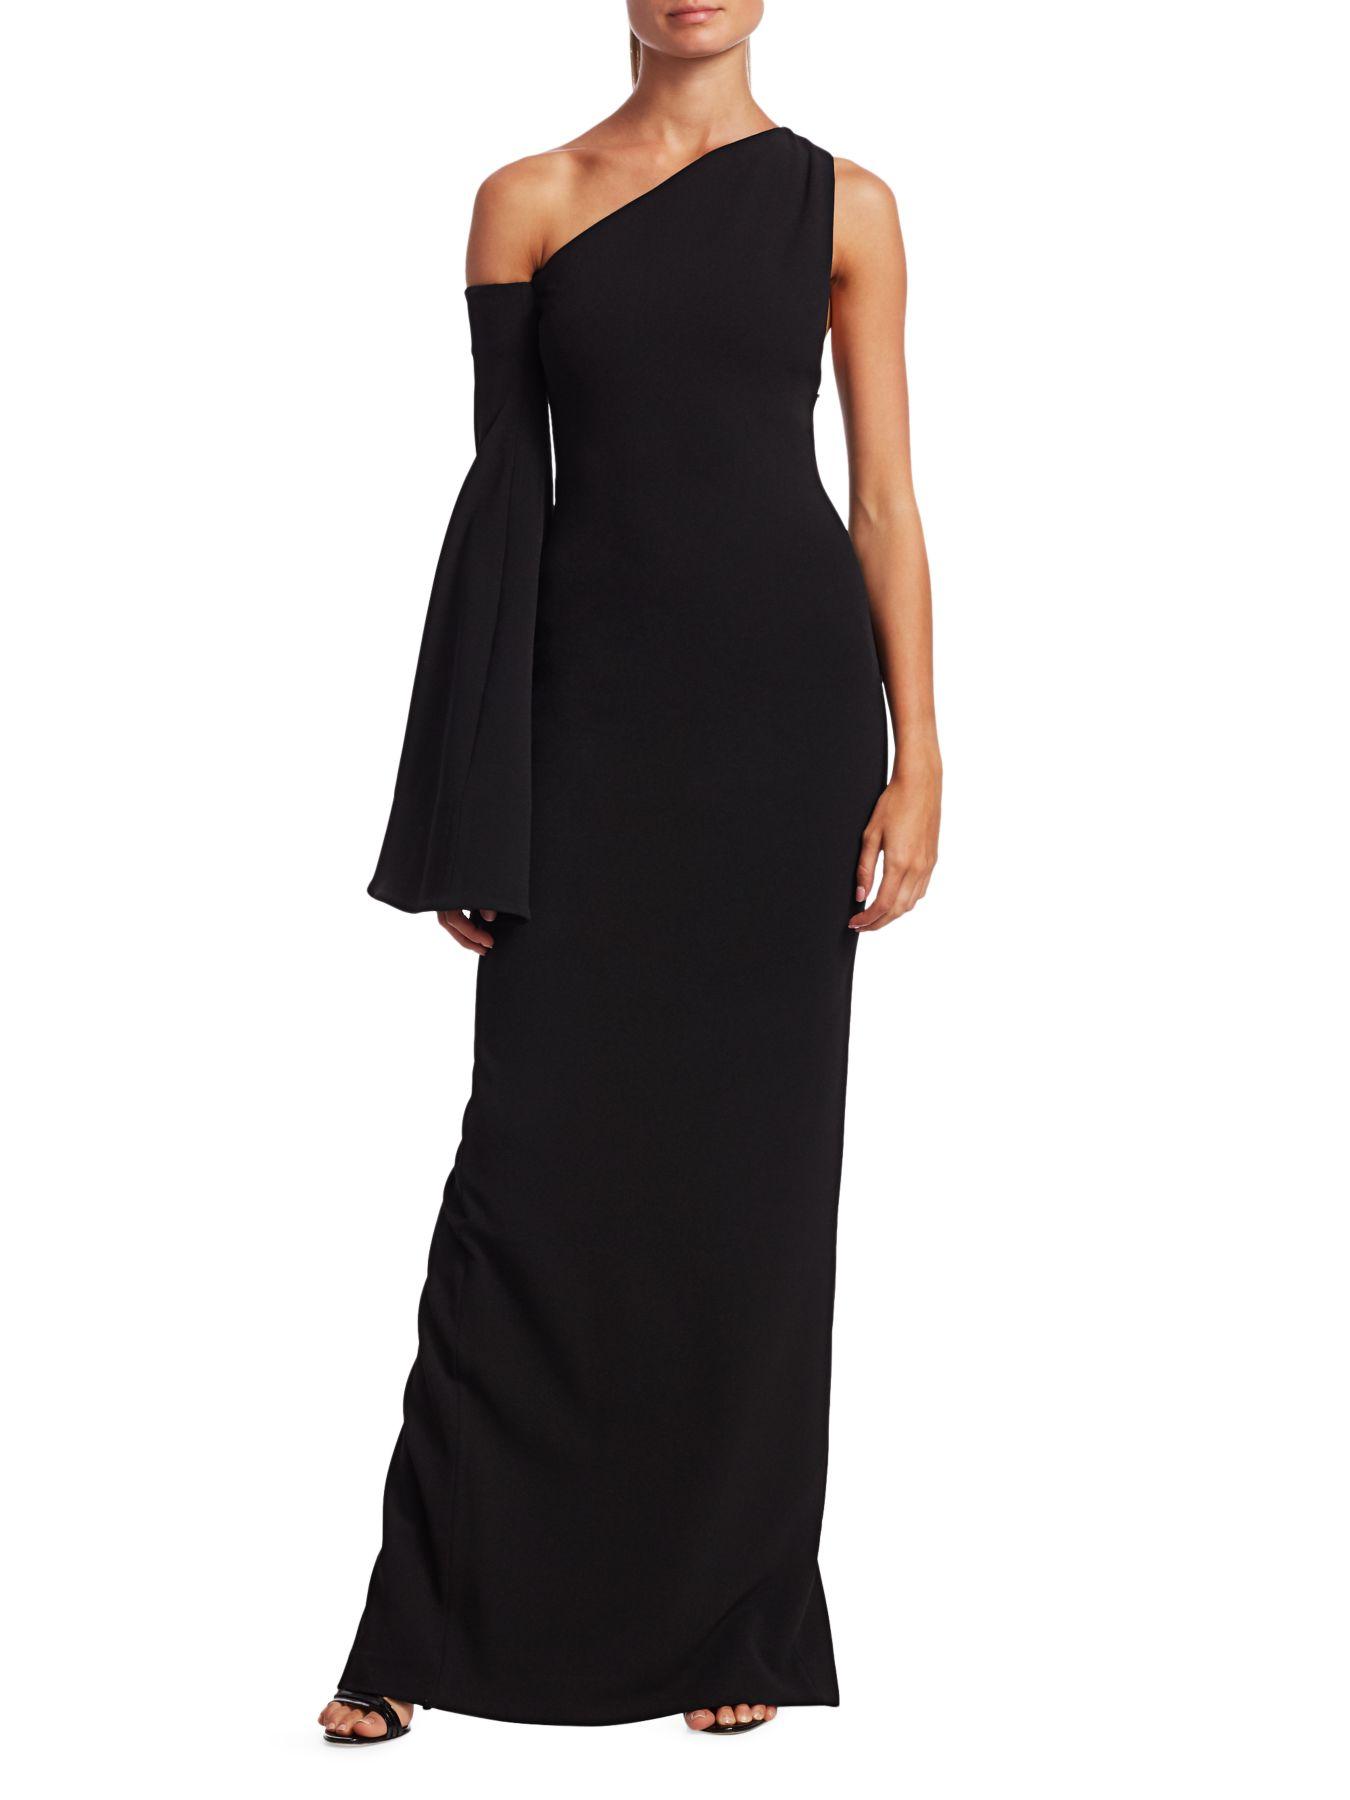 Solace London Synthetic Siara Asymmetric Maxi Dress in Black - Lyst